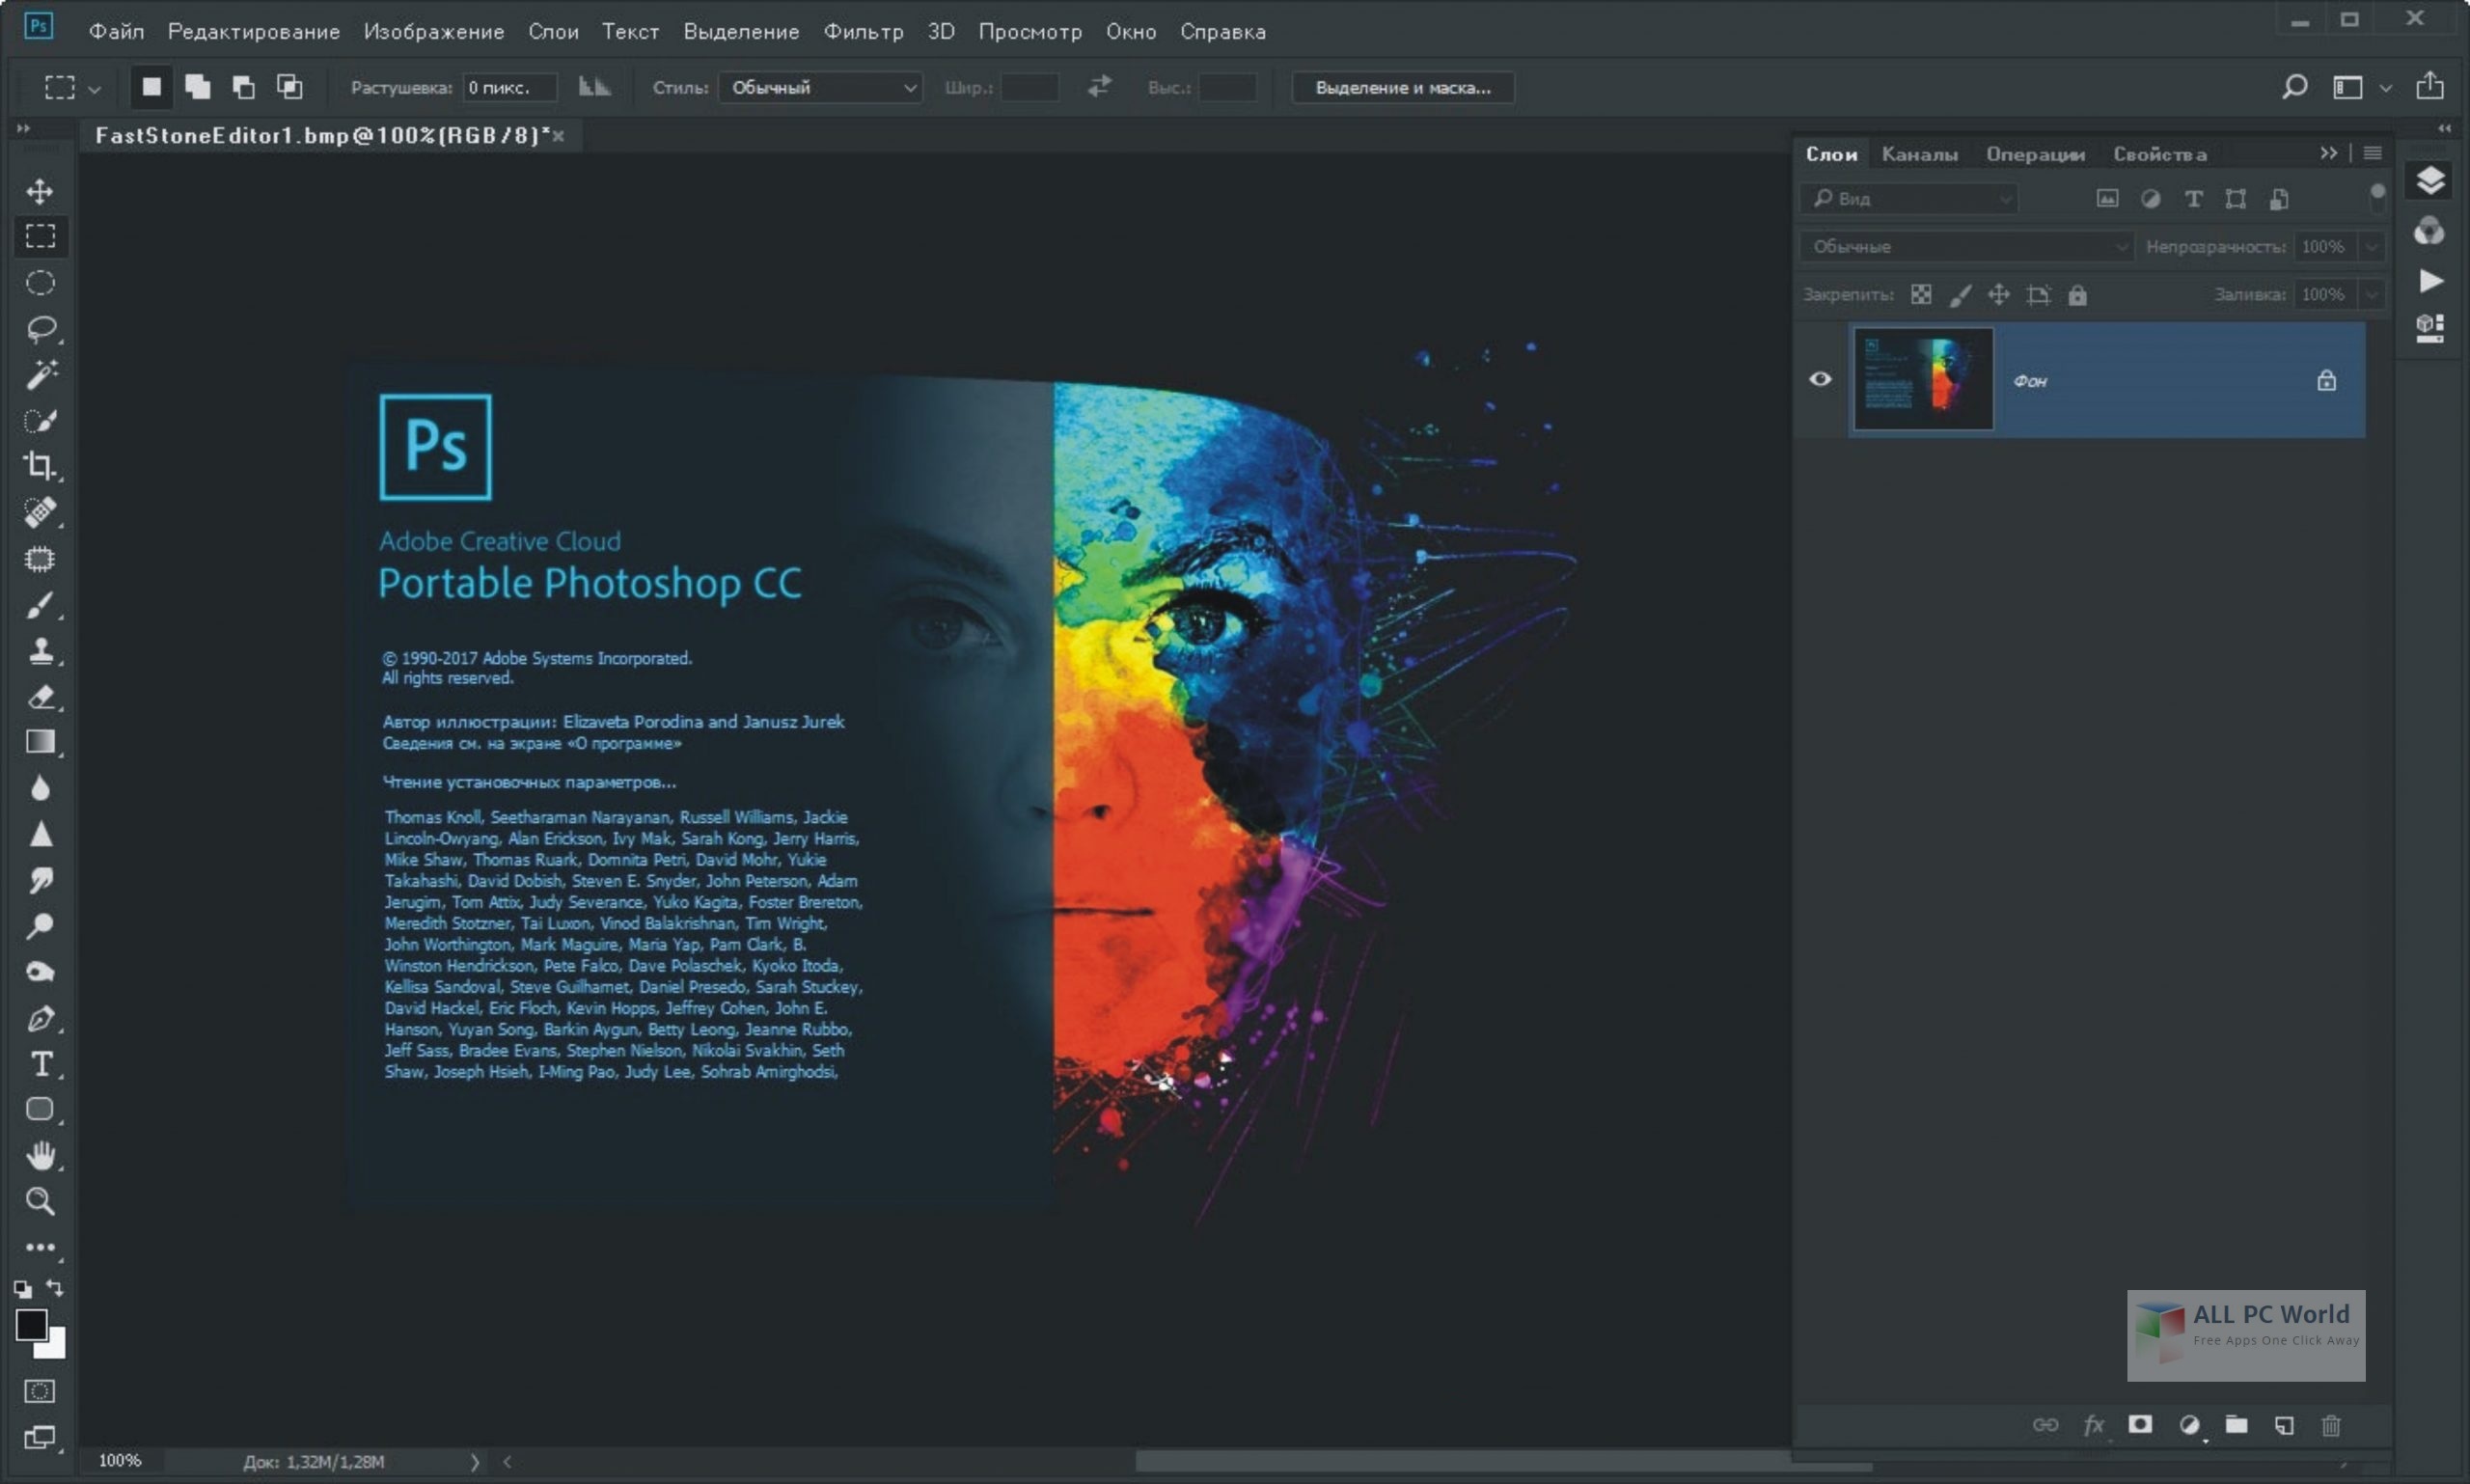 Adobe Photoshop CC 2020 v21.1.2 Free Download - ALL PC World